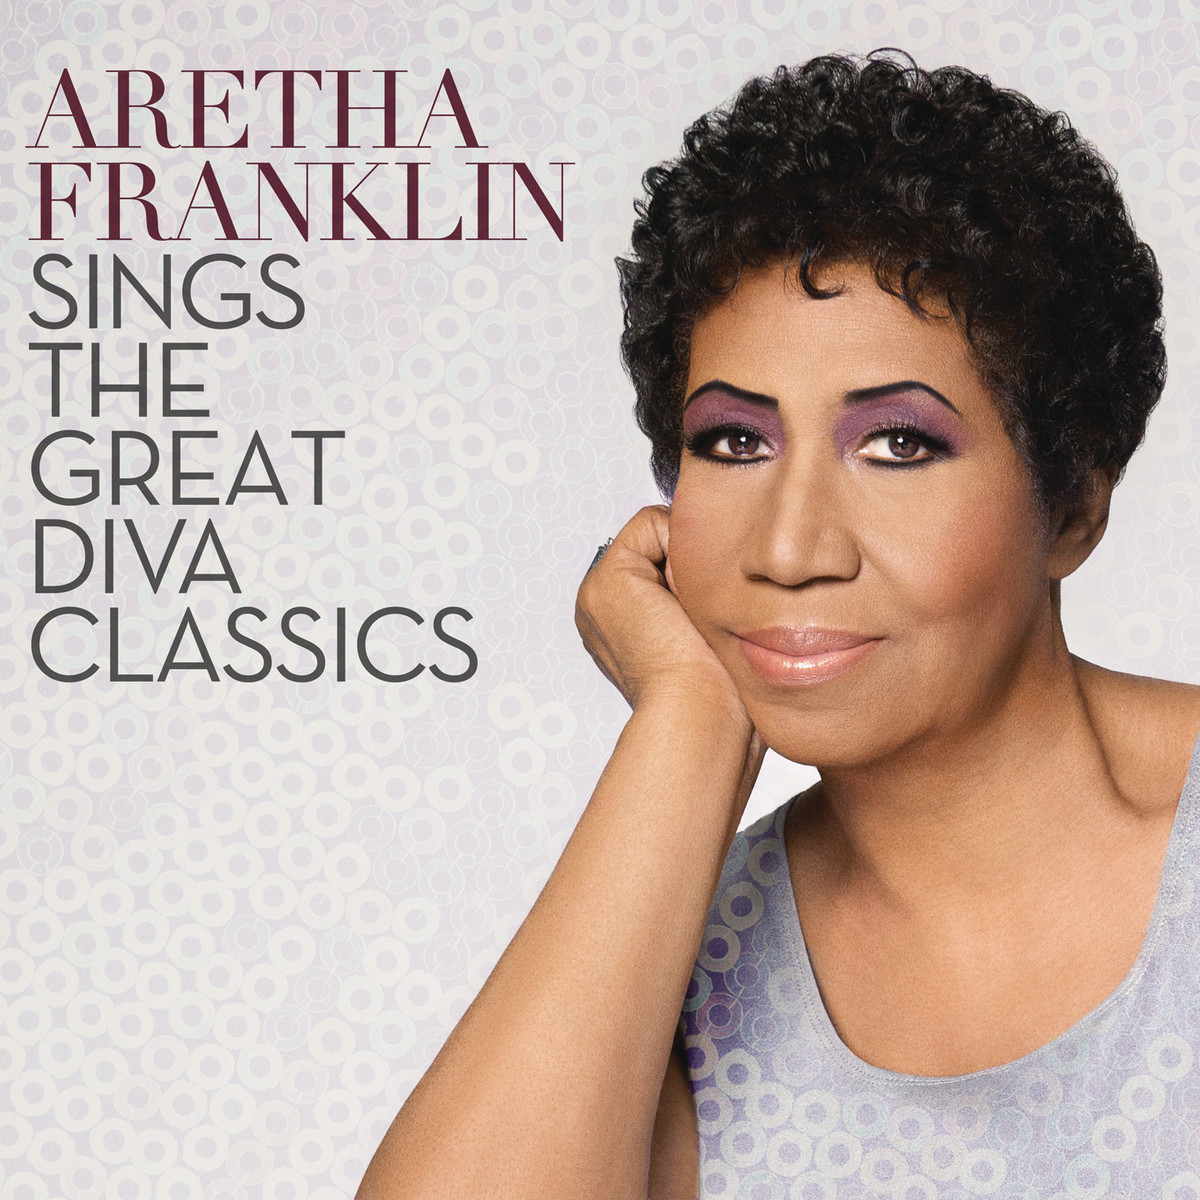 New Music: Aretha Franklin "I Will Survive" (Gloria Gaynor Cover) (Destiny's Child Survivor Blend)